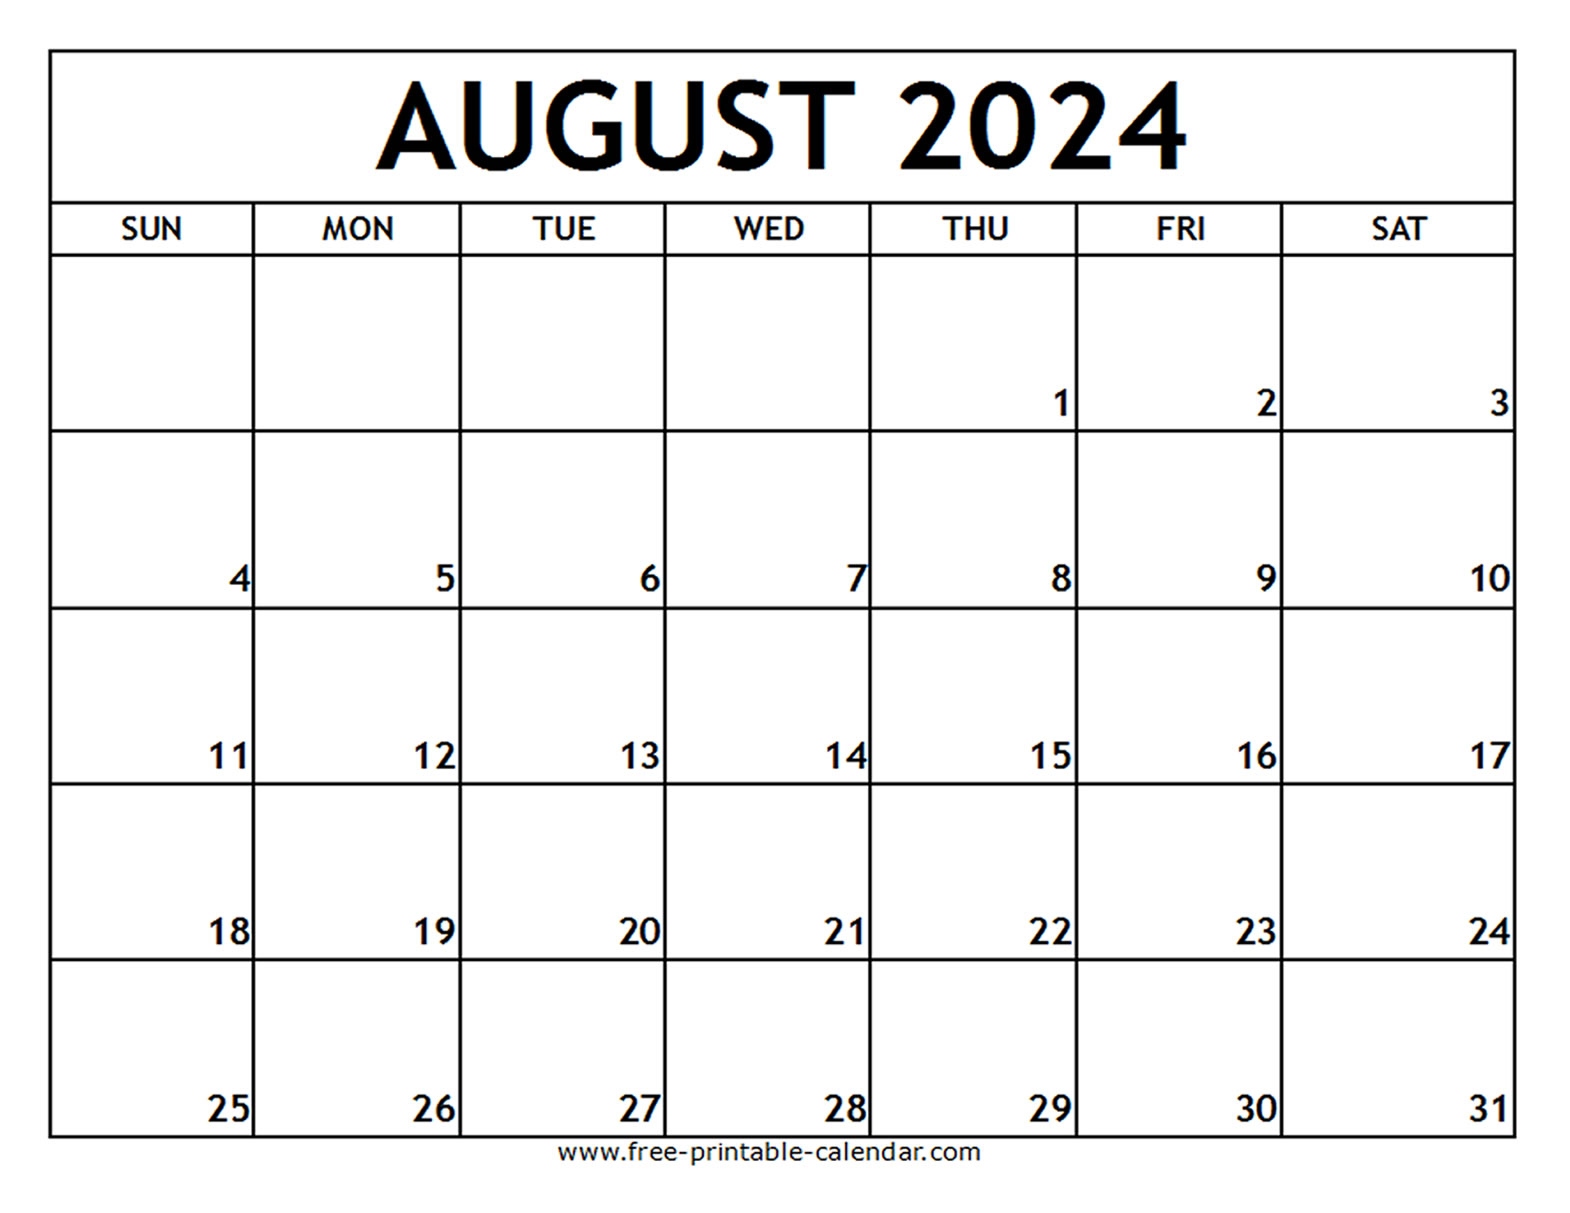 August 2024 Printable Calendar - Free-Printable-Calendar in Free Printable Calendar August 2024 To August 2024